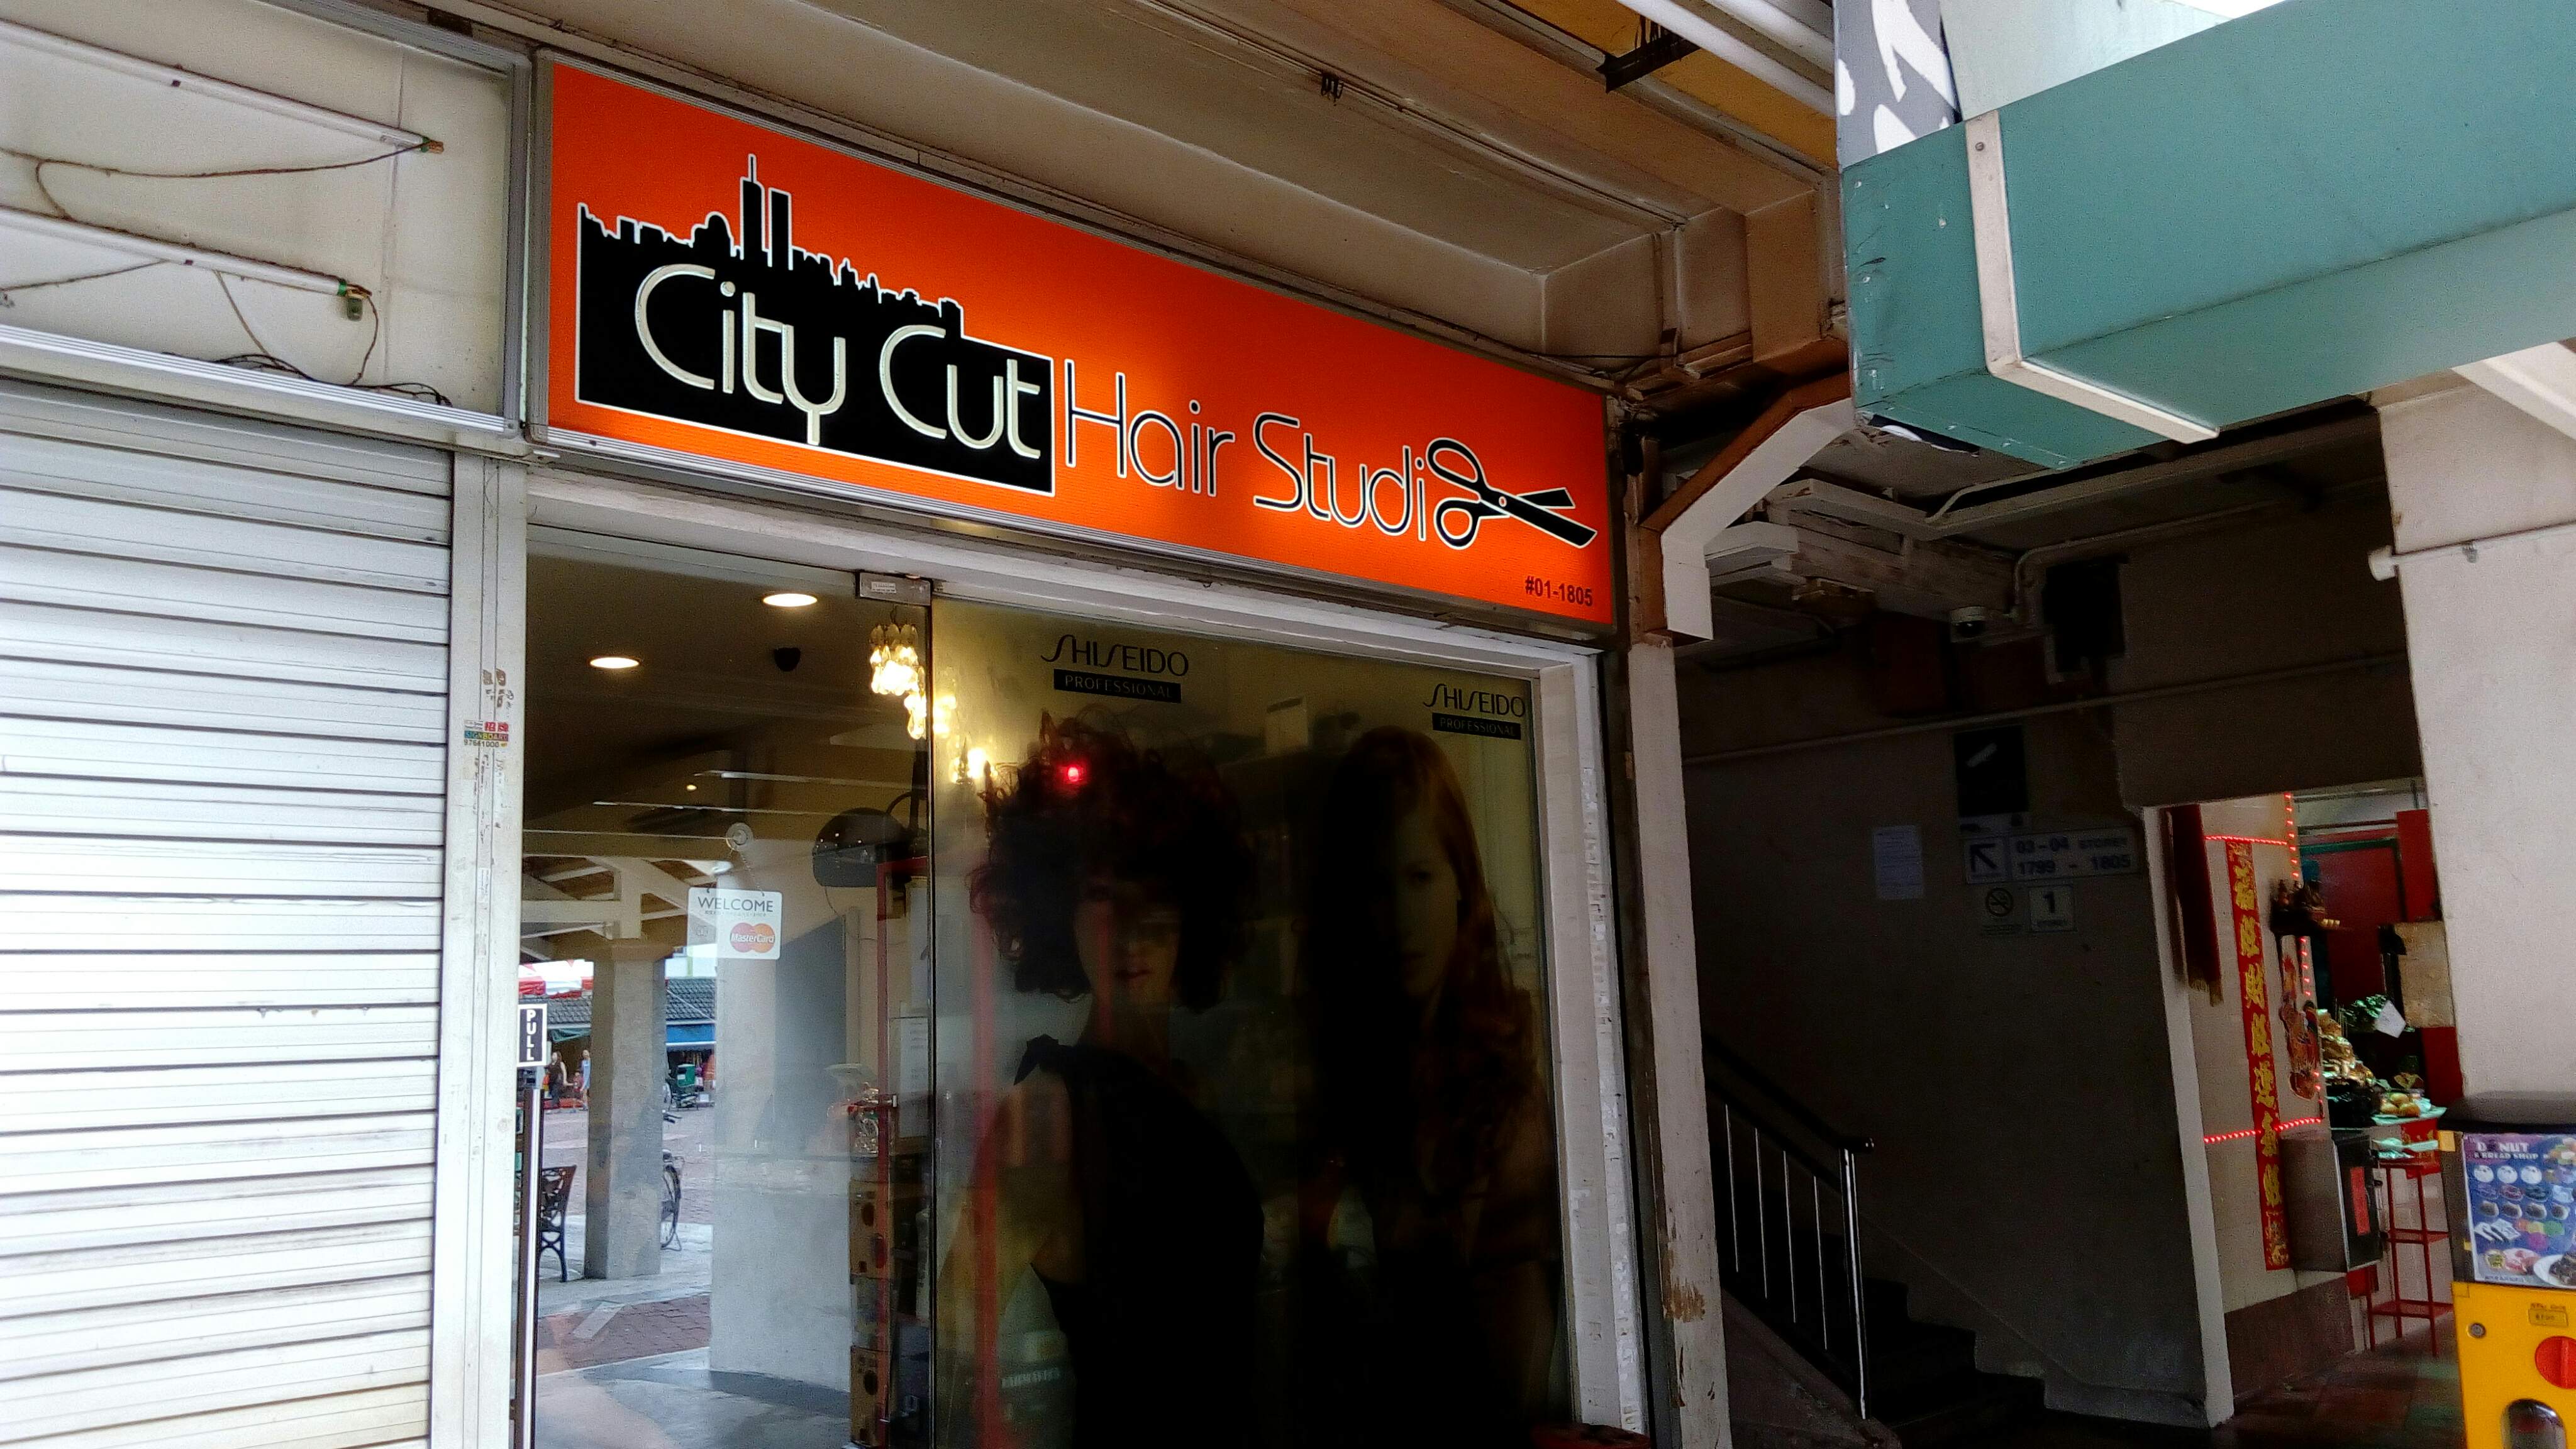 Singapore Service - Hair+Salon - City Cut Hair Studio | Nestia